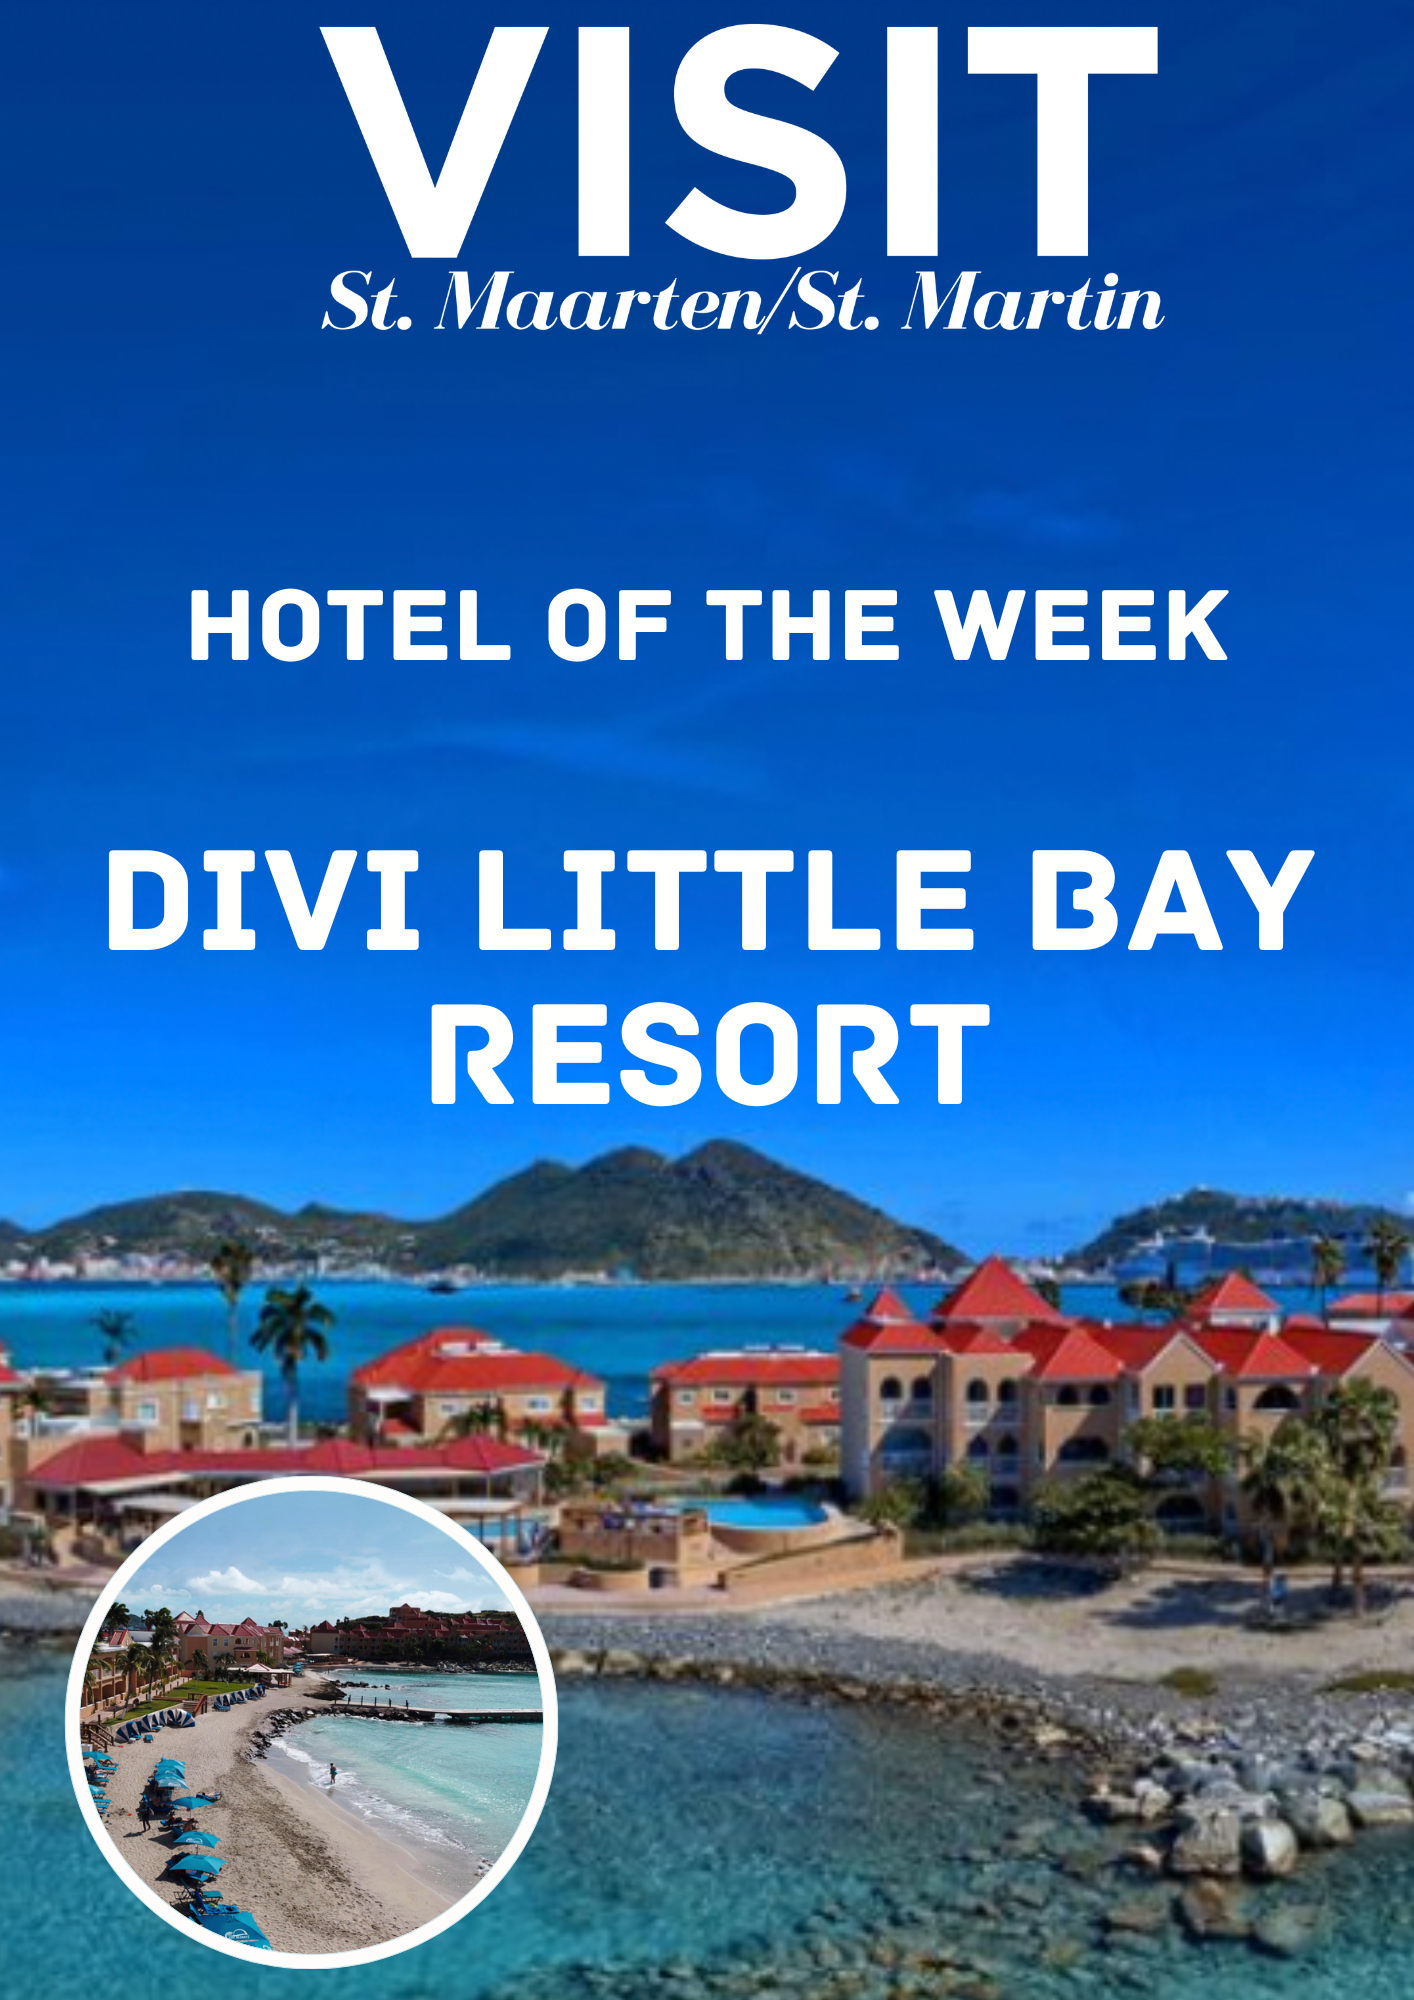 Divi Little Bay Beach Resort in Little Bay St Maarten